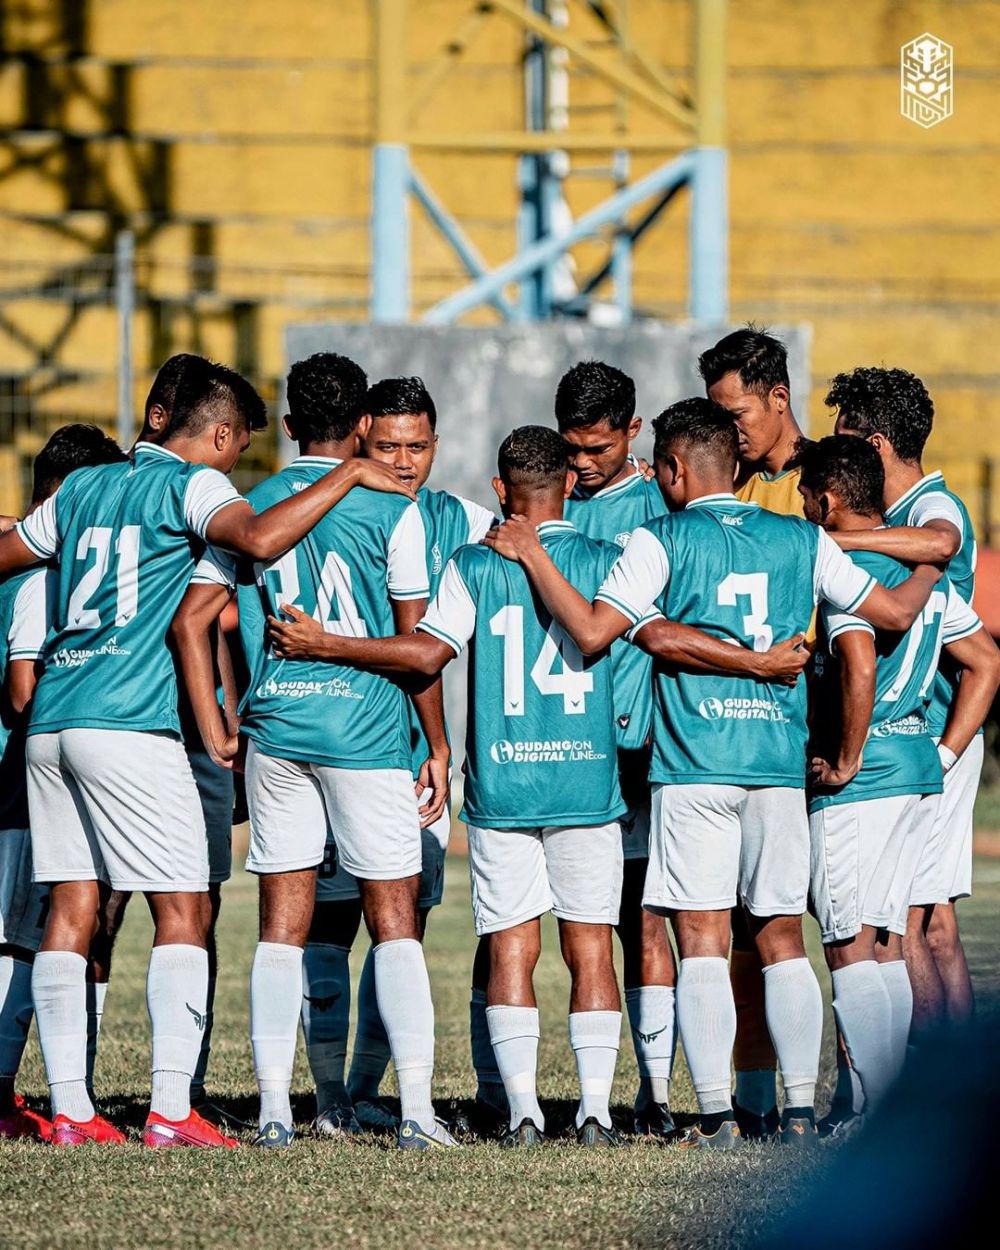 Hasil Liga 2, Nusantara United FC vs PSIM Yogyakarta Berakhir Imbang  